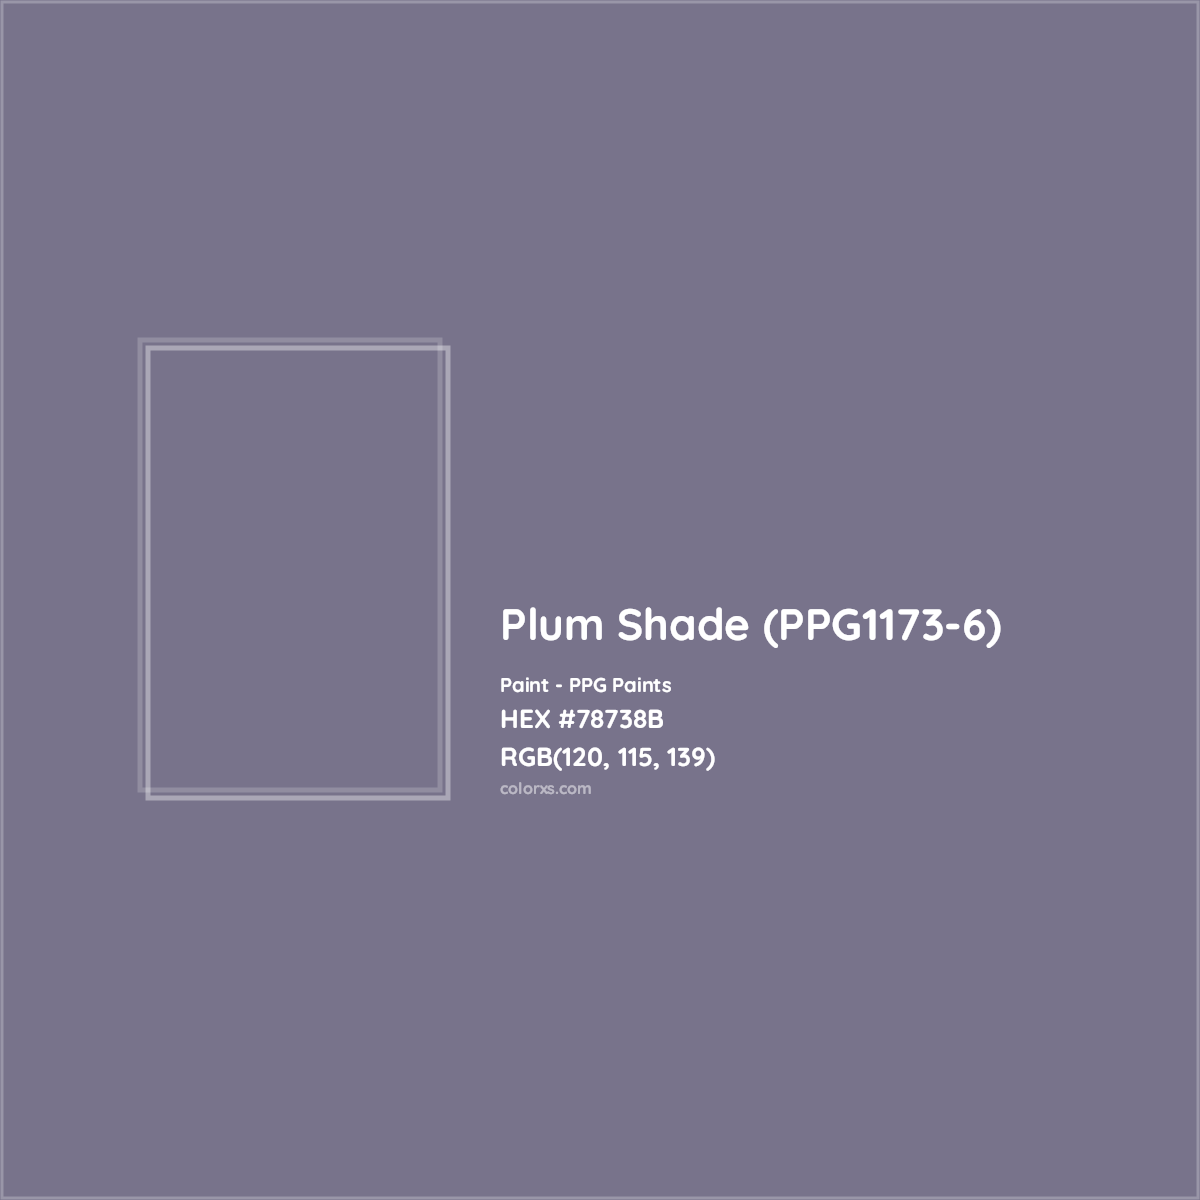 HEX #78738B Plum Shade (PPG1173-6) Paint PPG Paints - Color Code